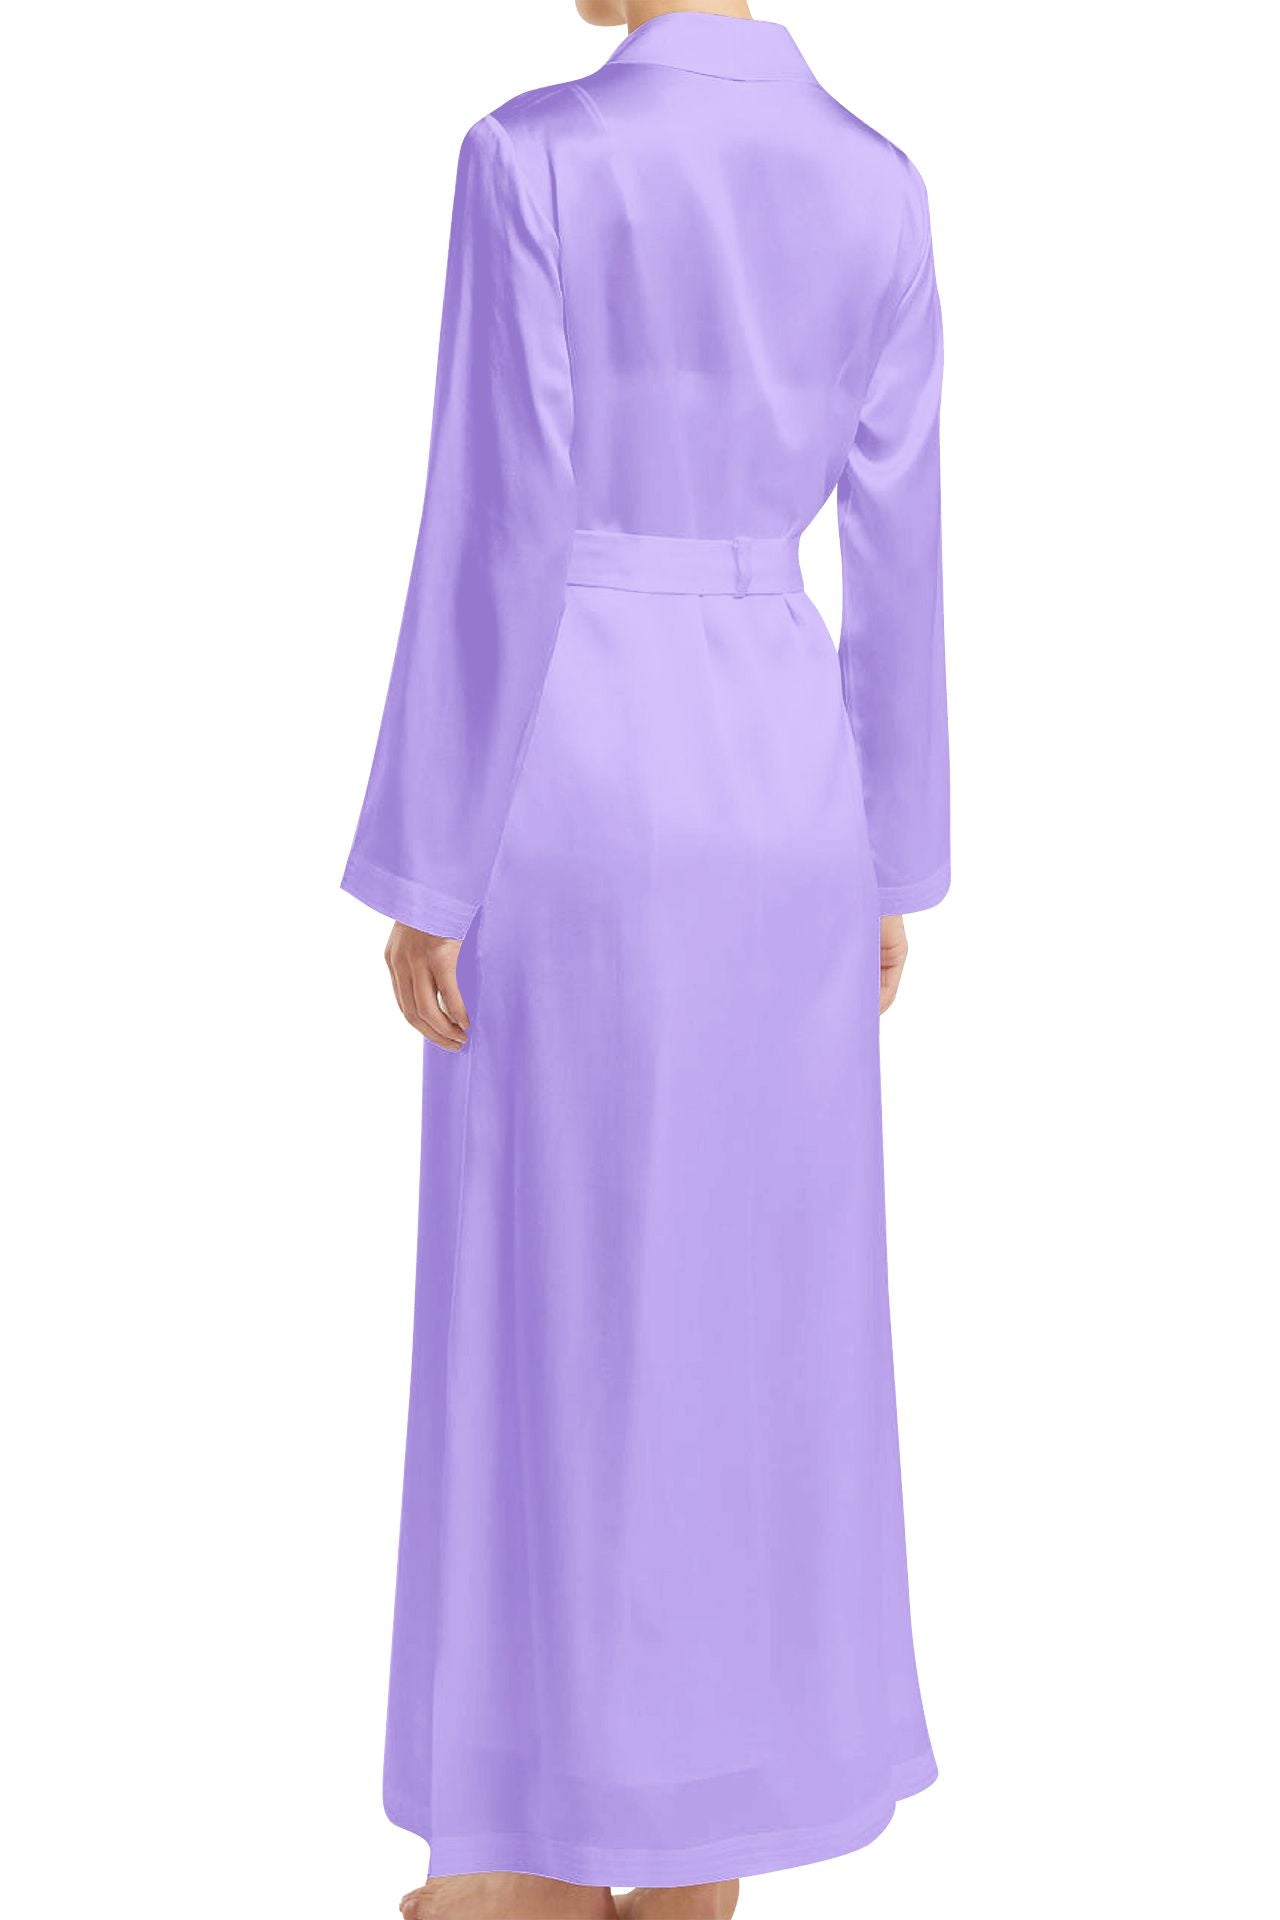 "Kyle X Shahida" "purple wrap around dress" "long sleeve wrap dress" "lavender wrap dress"